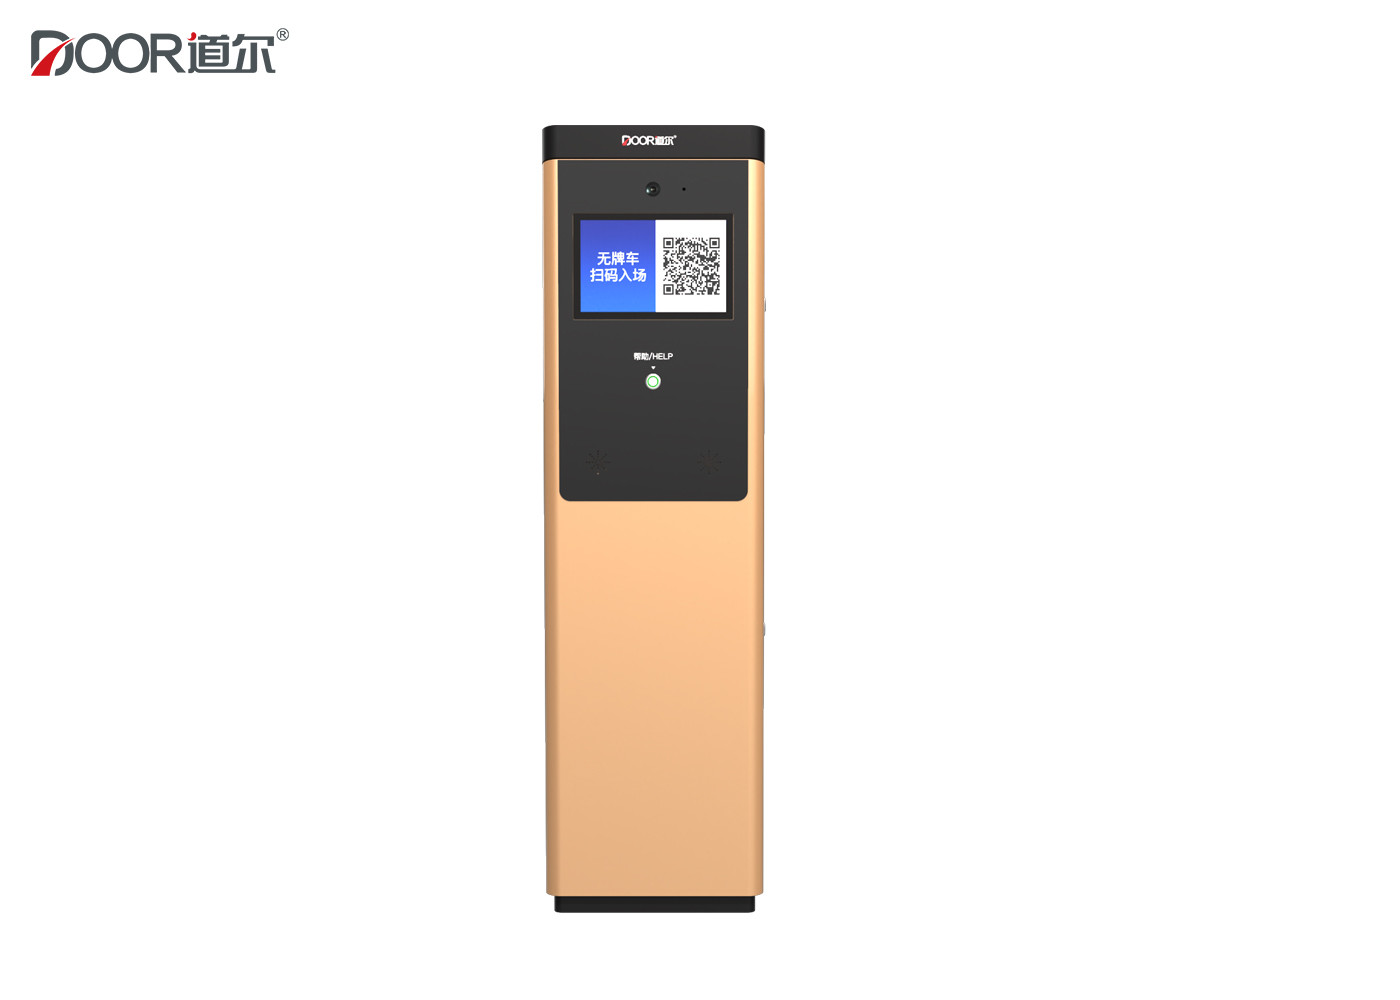 Scanning Code Parking Ticket Dispenser Machine Fast Printer Ip Video Intercom 110v